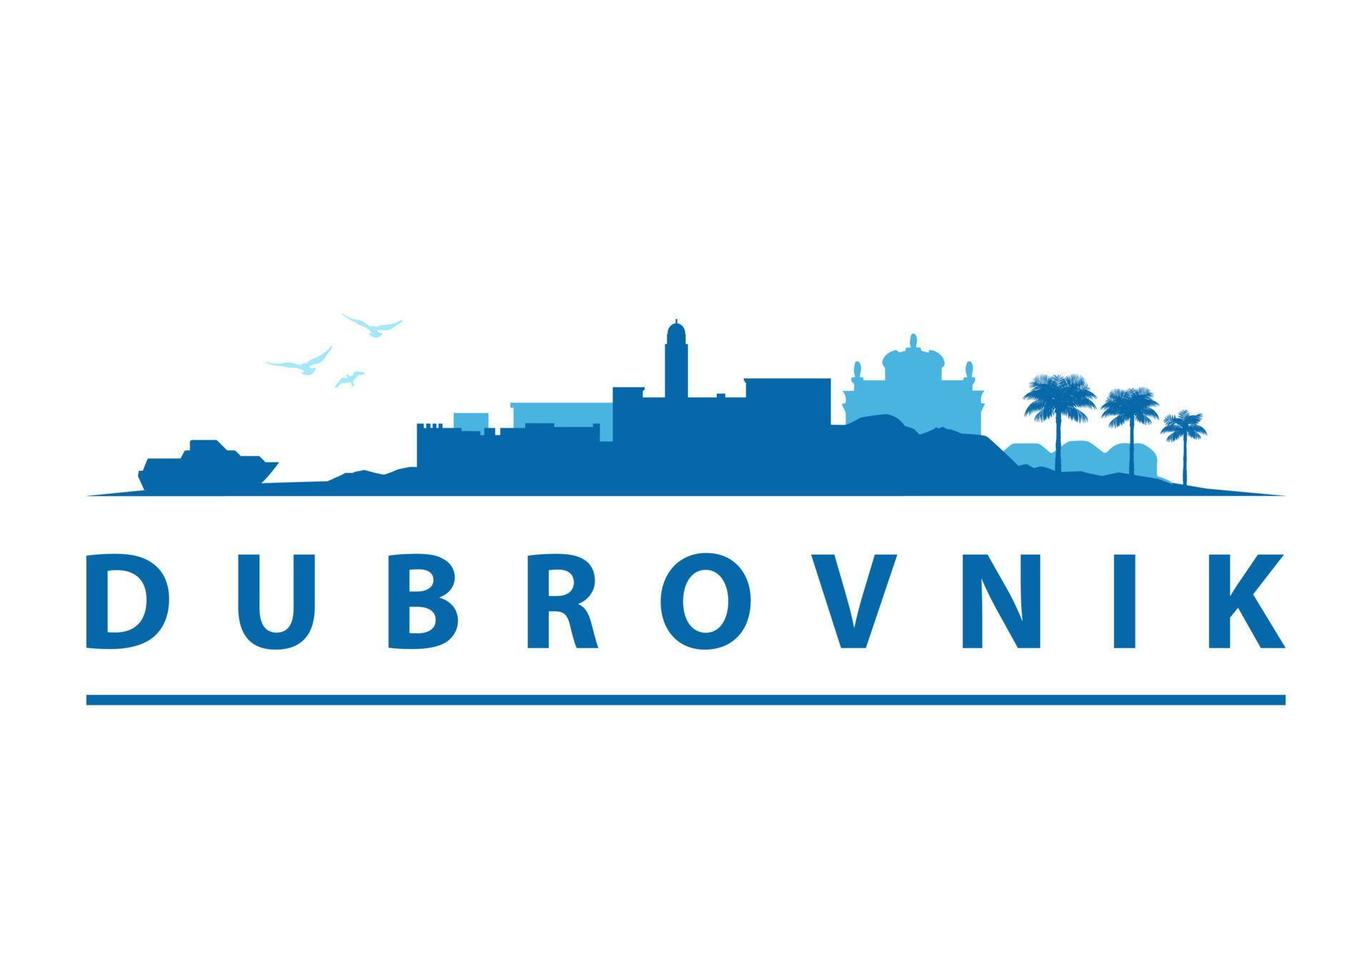 Dubrovnik Croatian City Skyline Landscape Black Vector Shape Silhouette Graphic. Destination in Croatia.